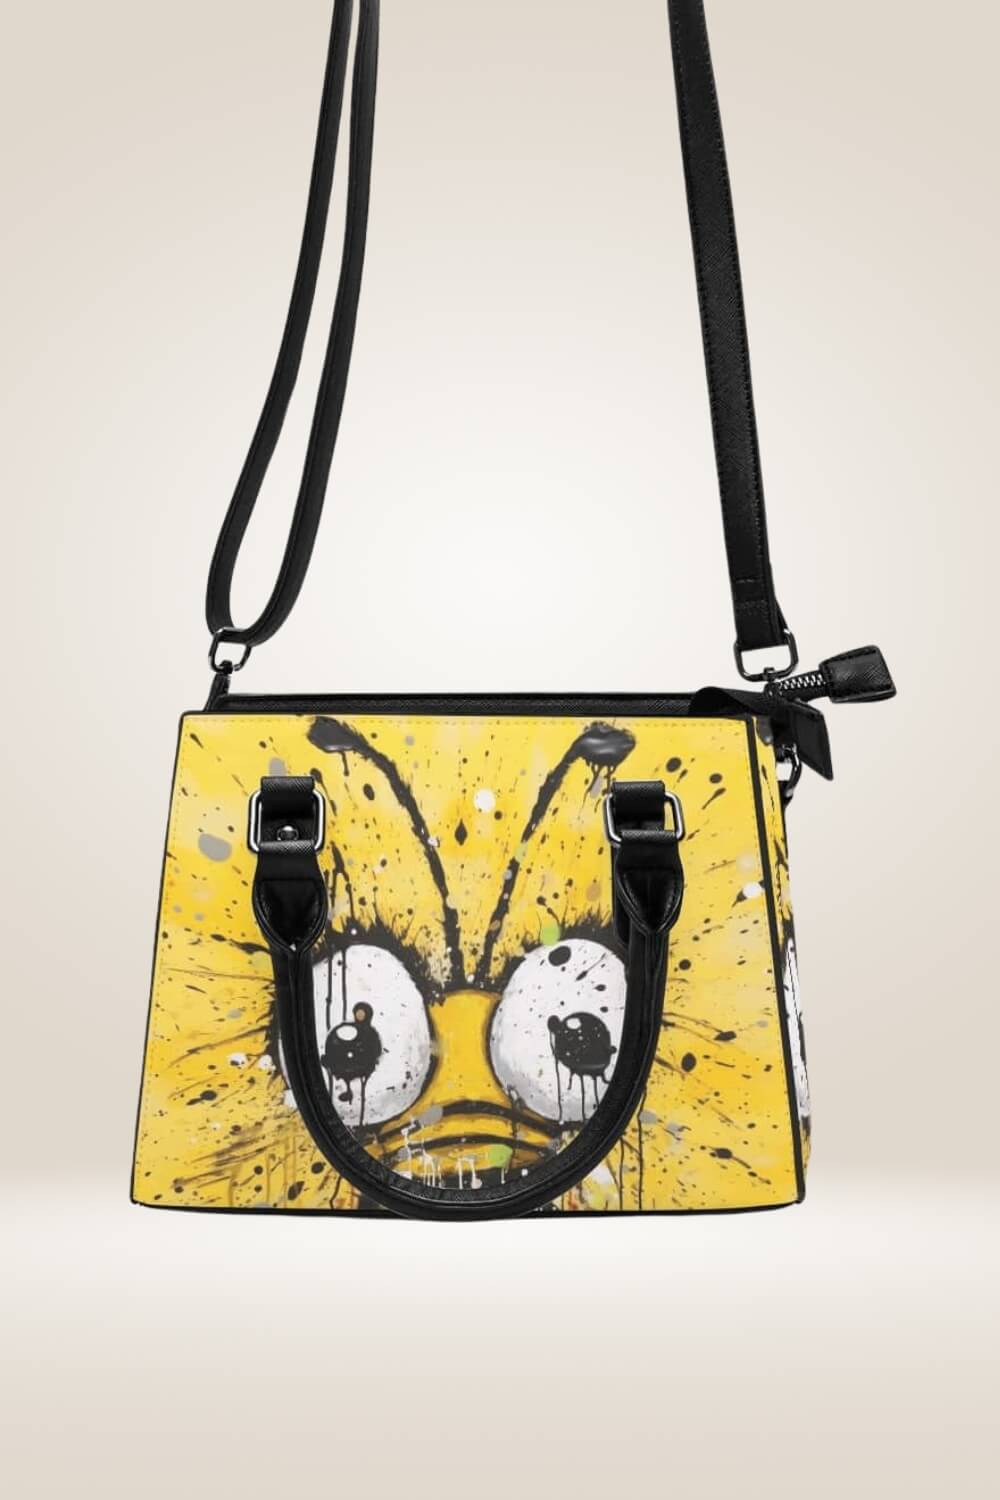 Graffiti Bug Yellow Satchel Bag - TGC Boutique - Satchel Handbag